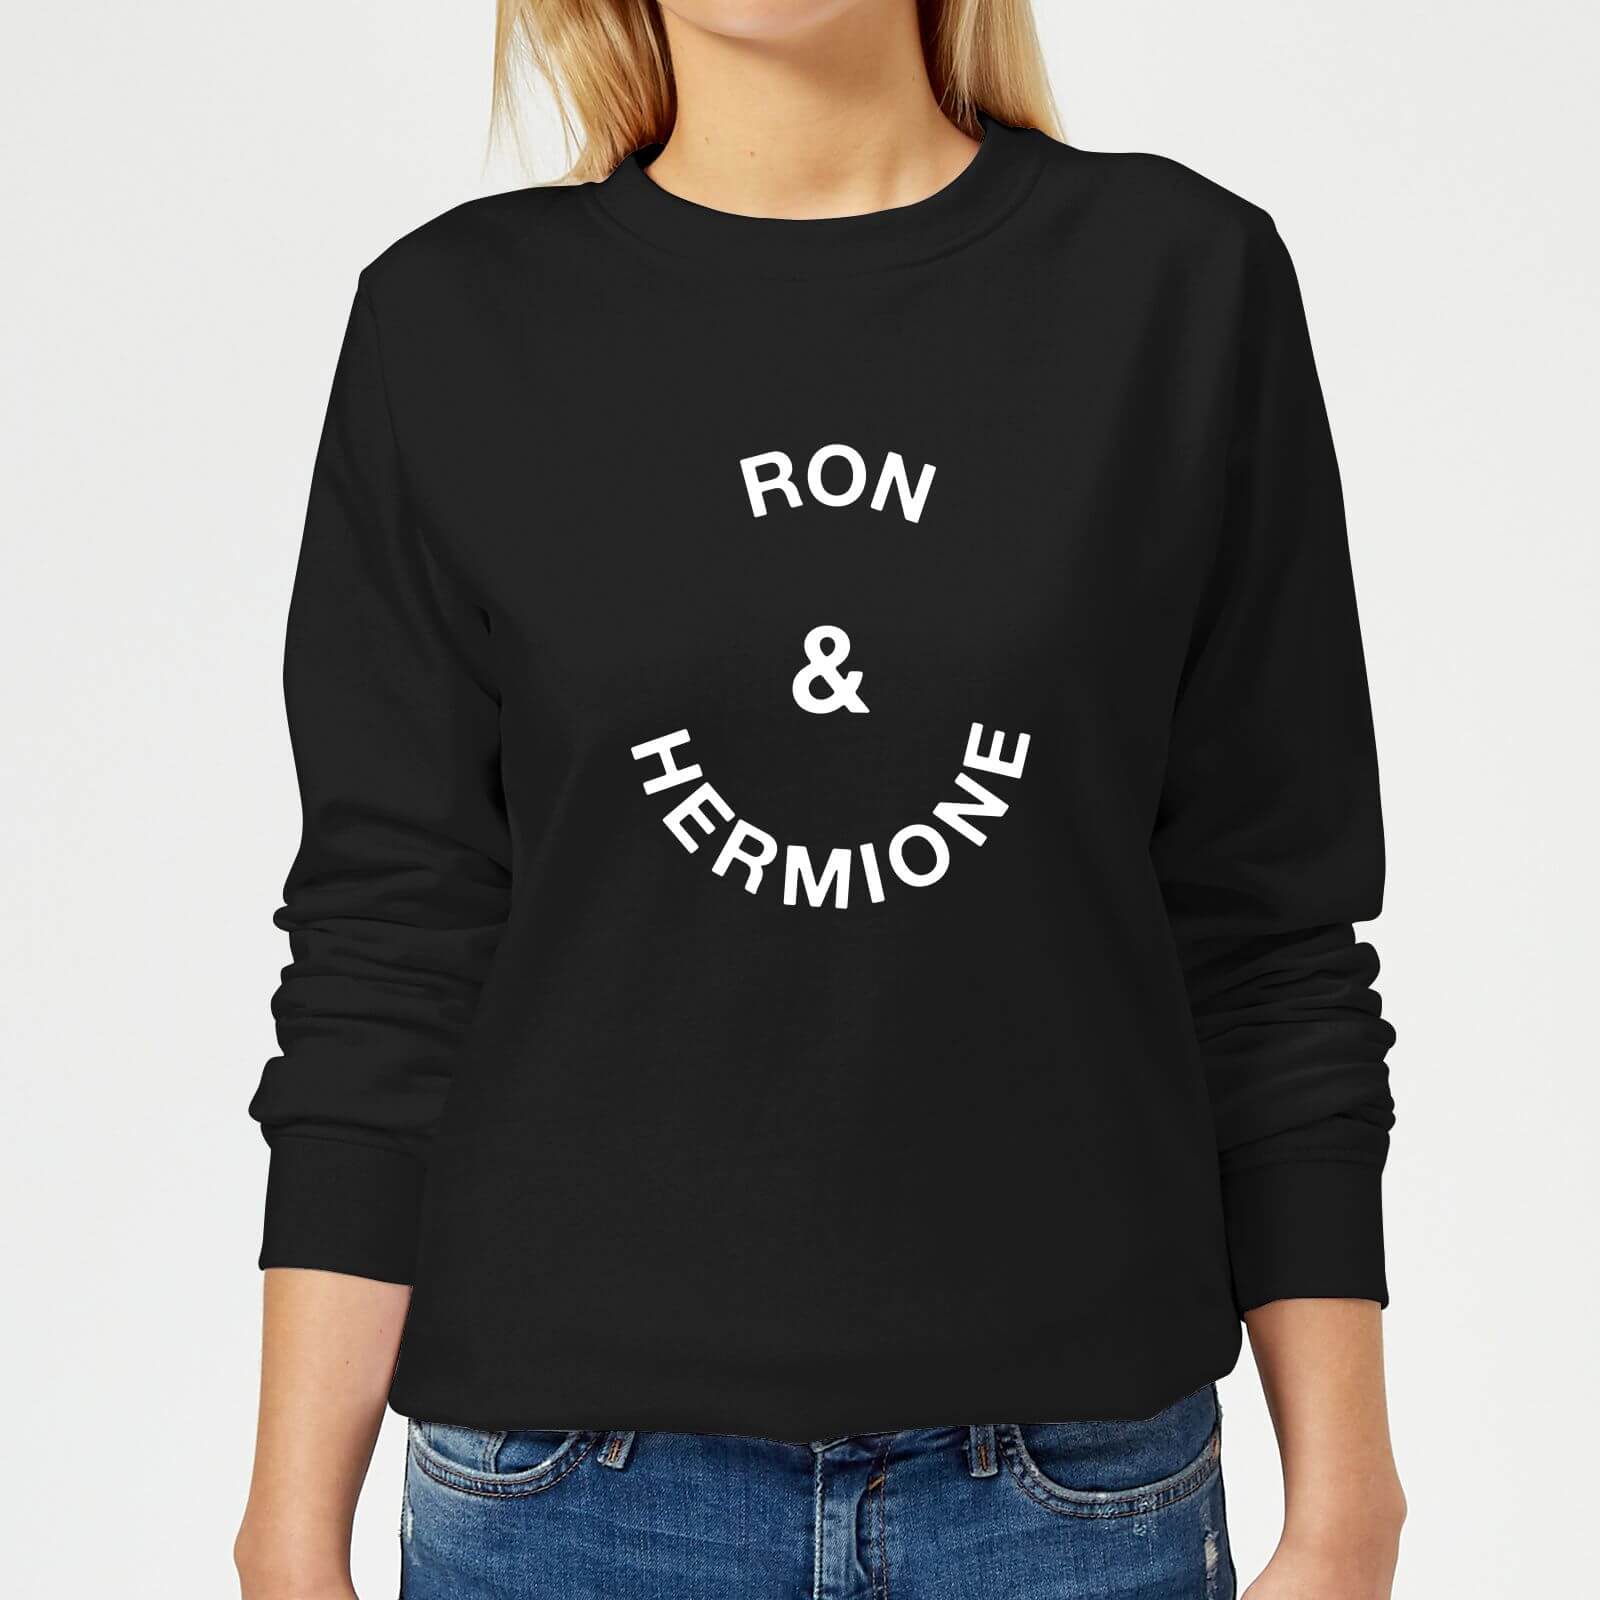 Ron & Hermione Women's Sweatshirt - Black - S - Black